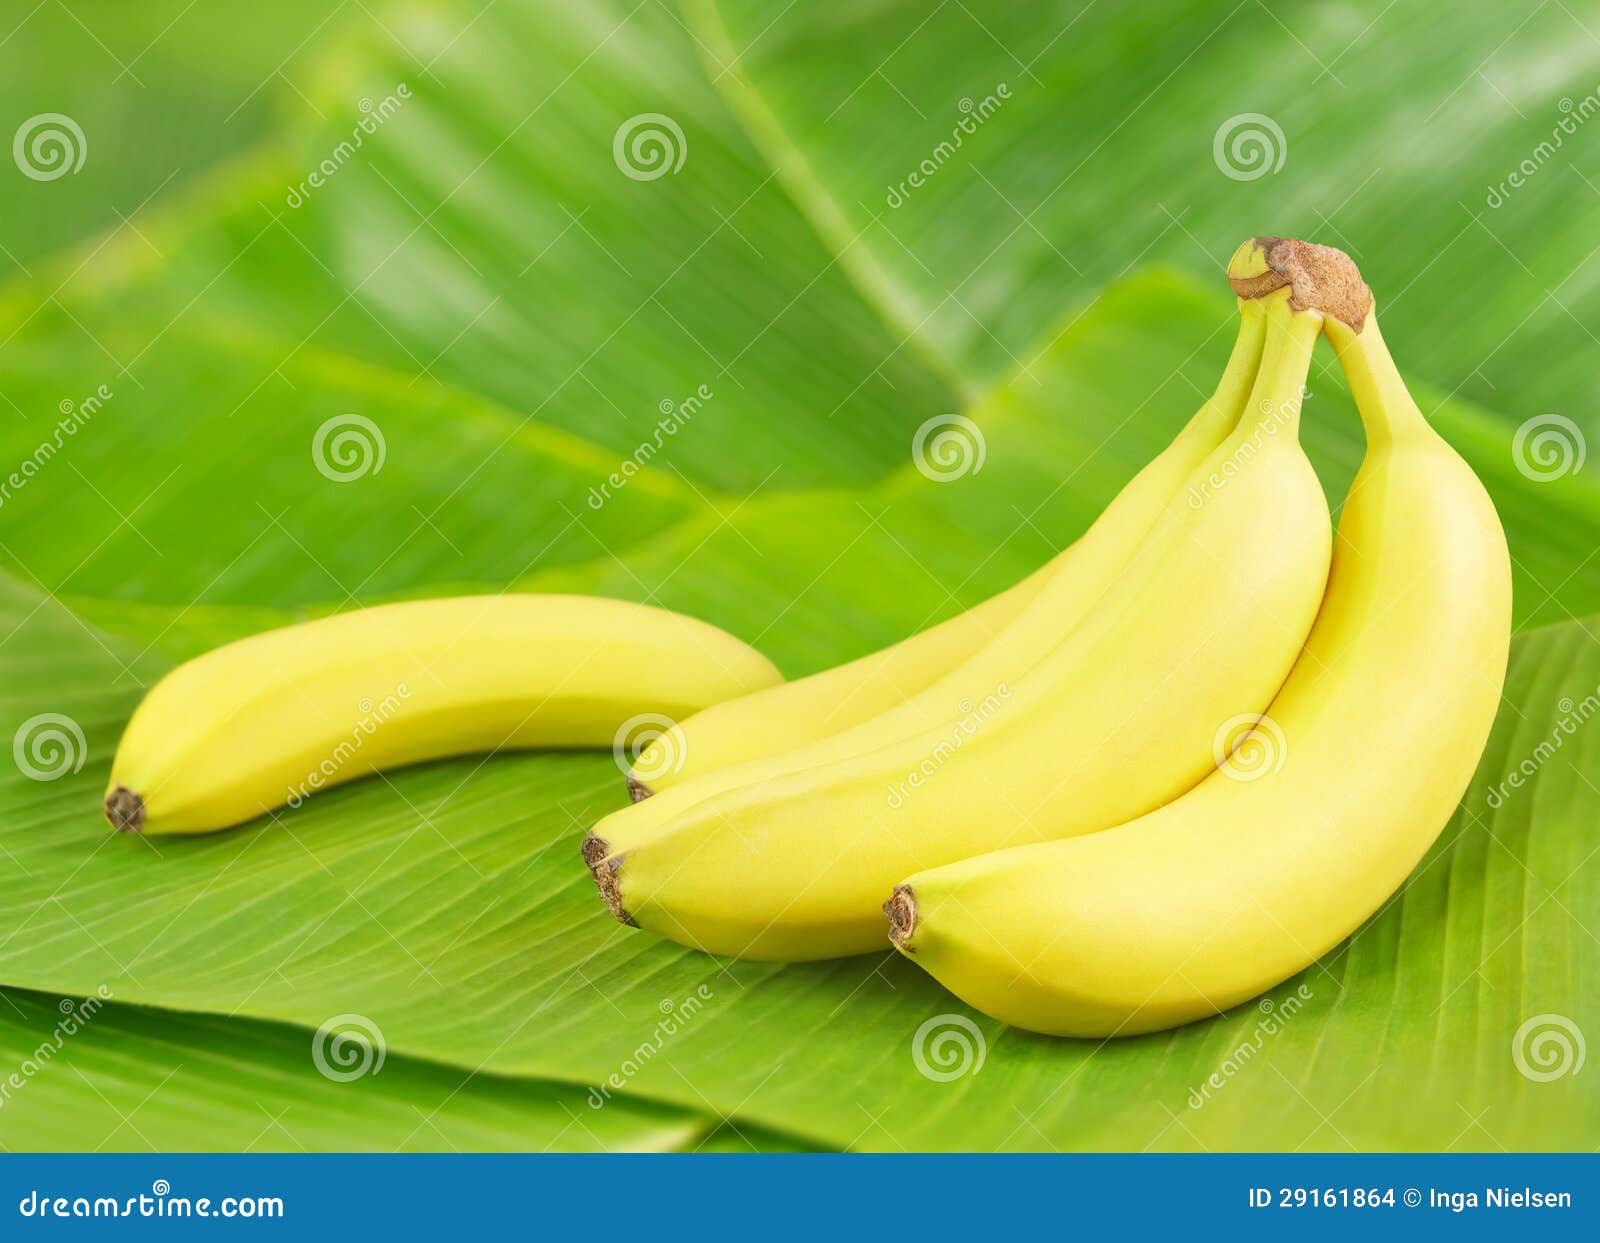 bananas on leaves